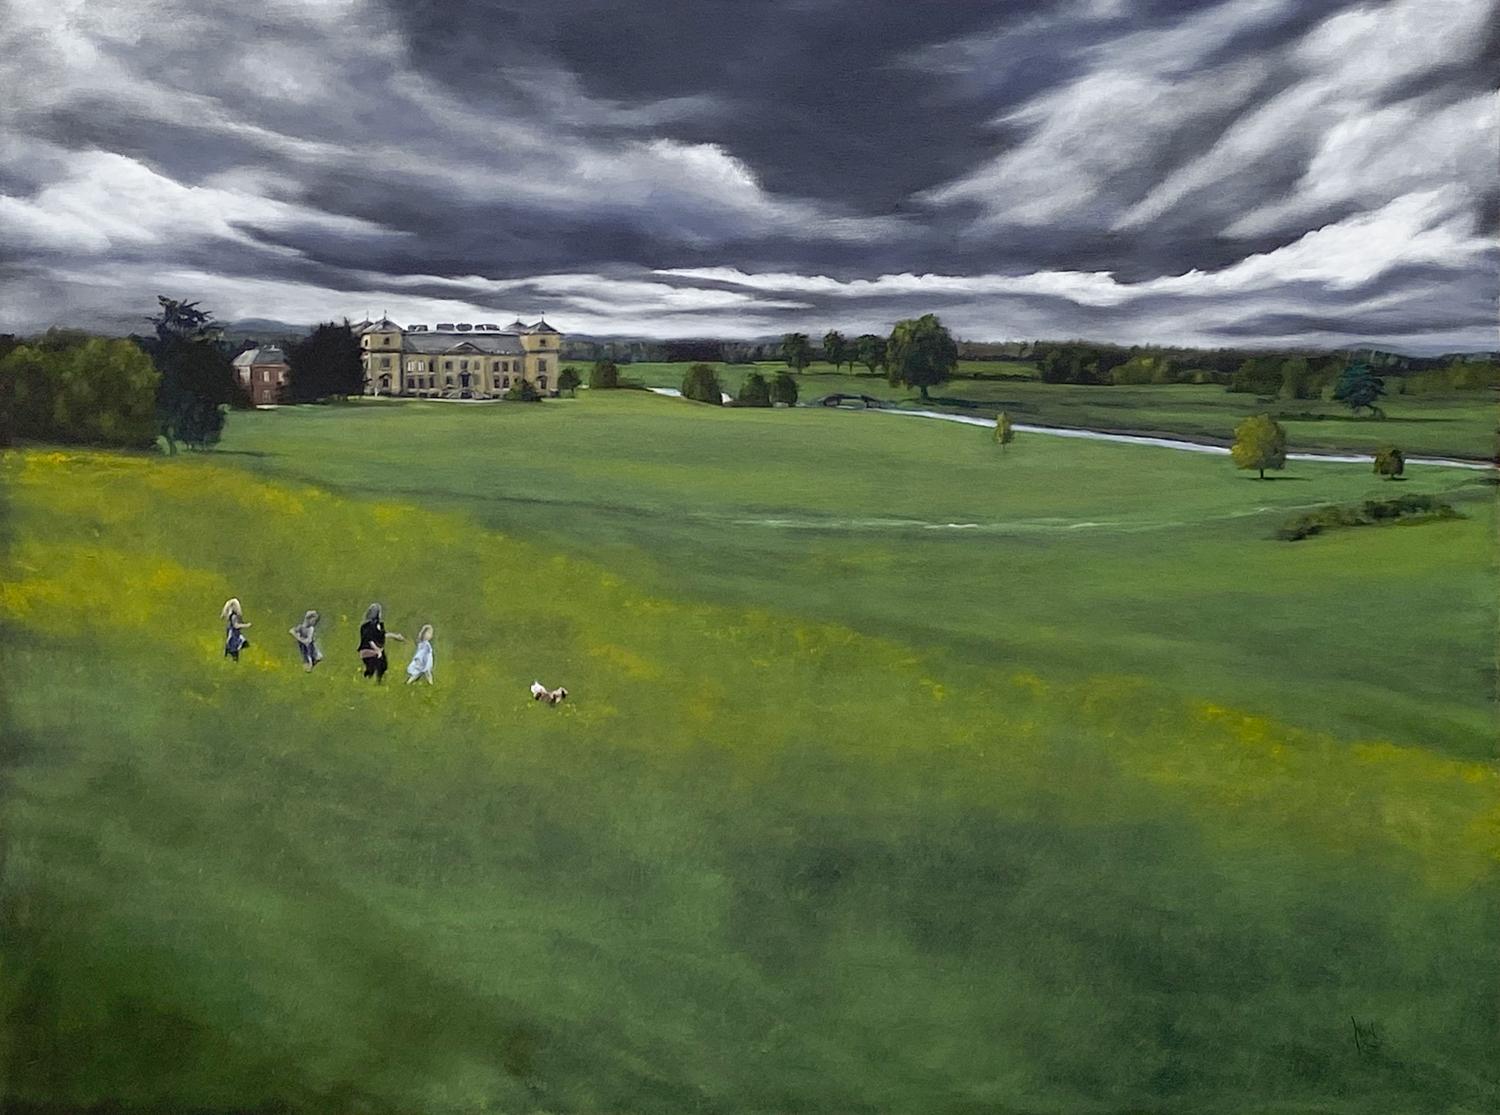 Mandy Main Landscape Painting - Chasing Lancelot, Oil Painting